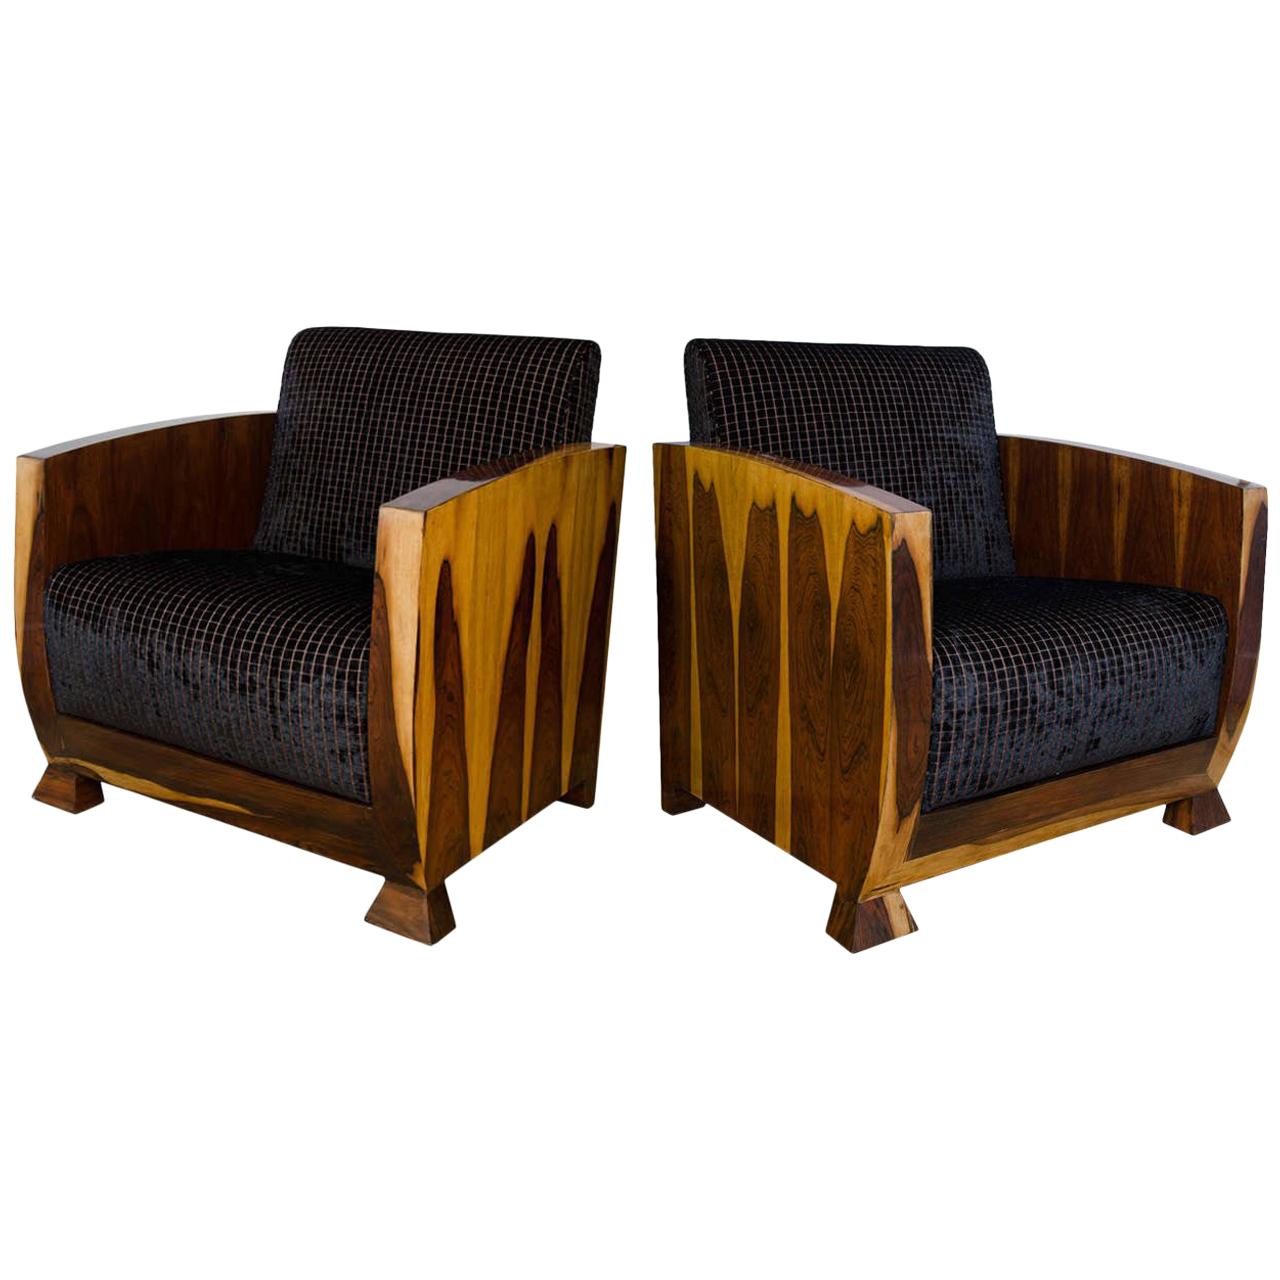 Original 1930s Art Deco Pair of Club Chairs, Chocolate Brown Velvet Upholstery